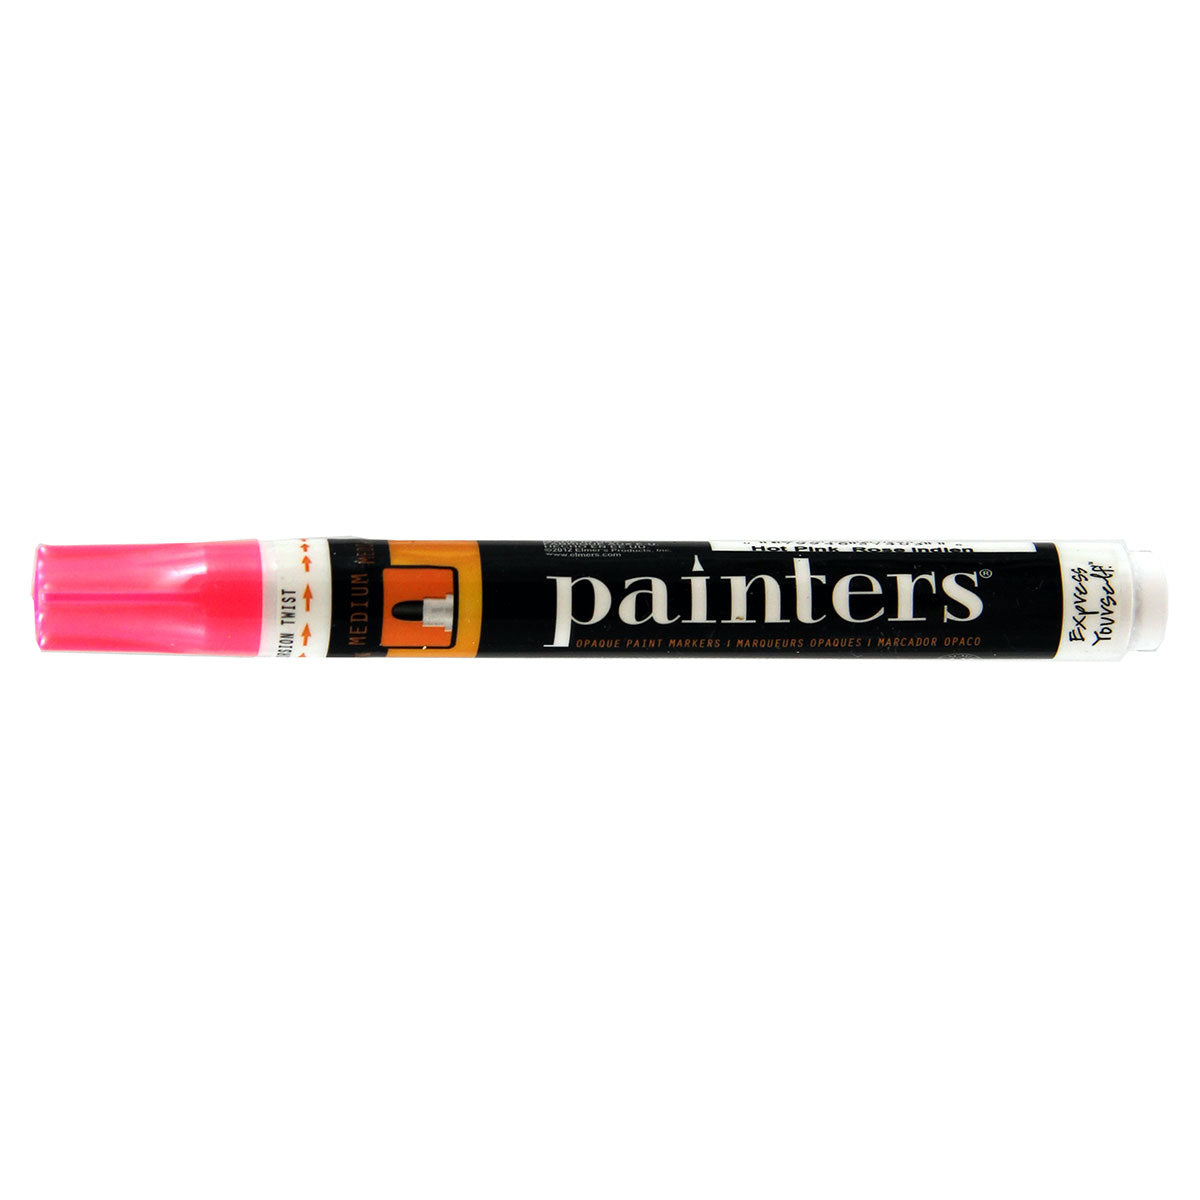 Elmer's Painters Paint Marker - Navy Blue, Medium Point